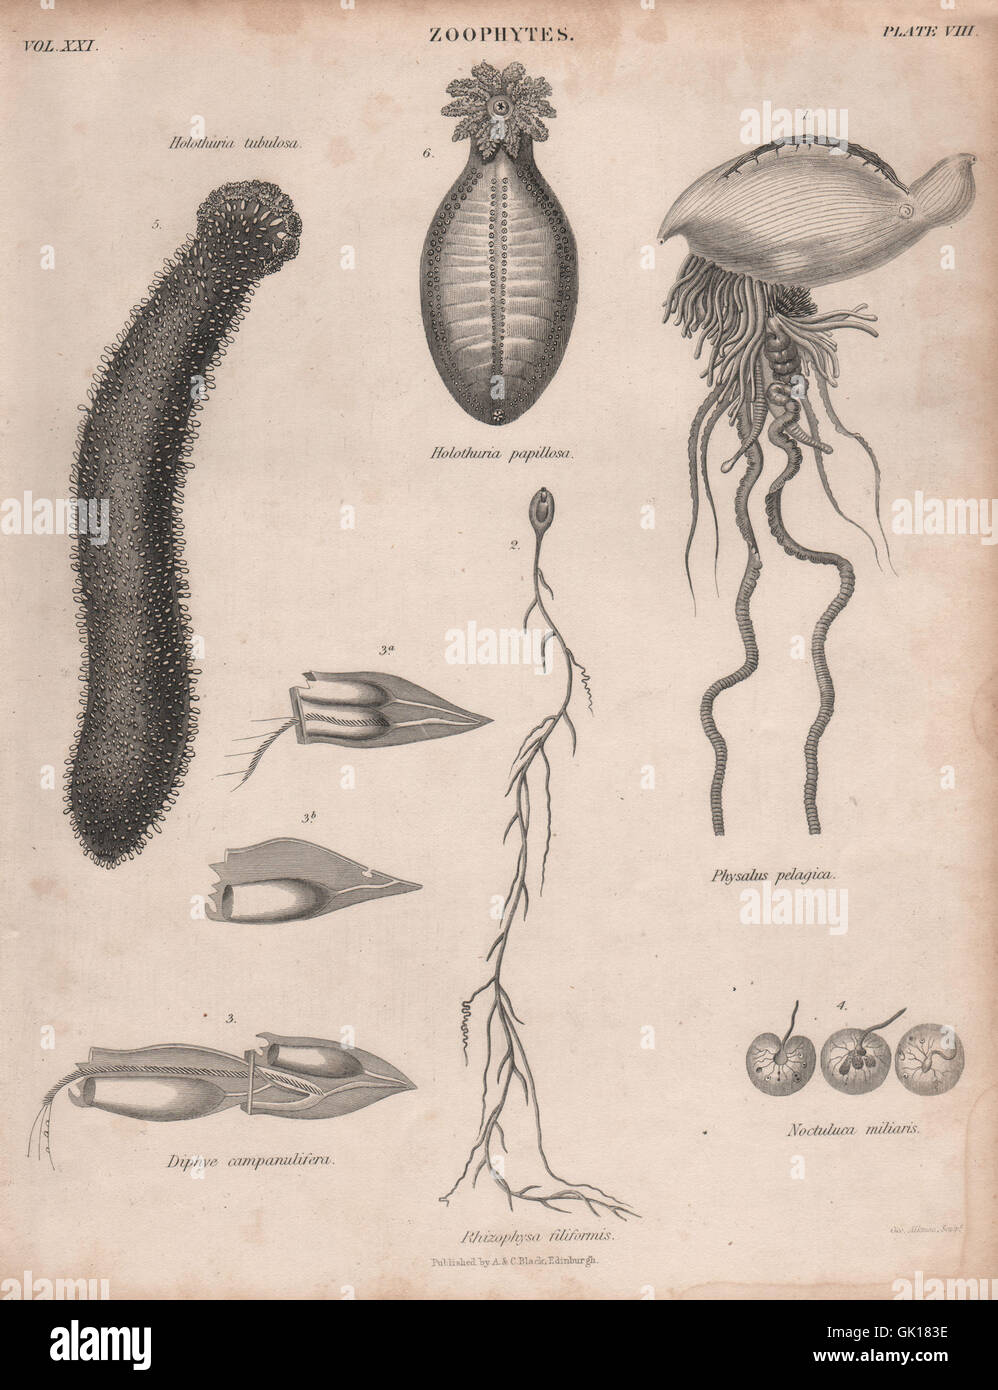 Zoophytes. Physalus pelagica. Rhizophysa filiformis. Campanulifera Diphye, 1860 Banque D'Images